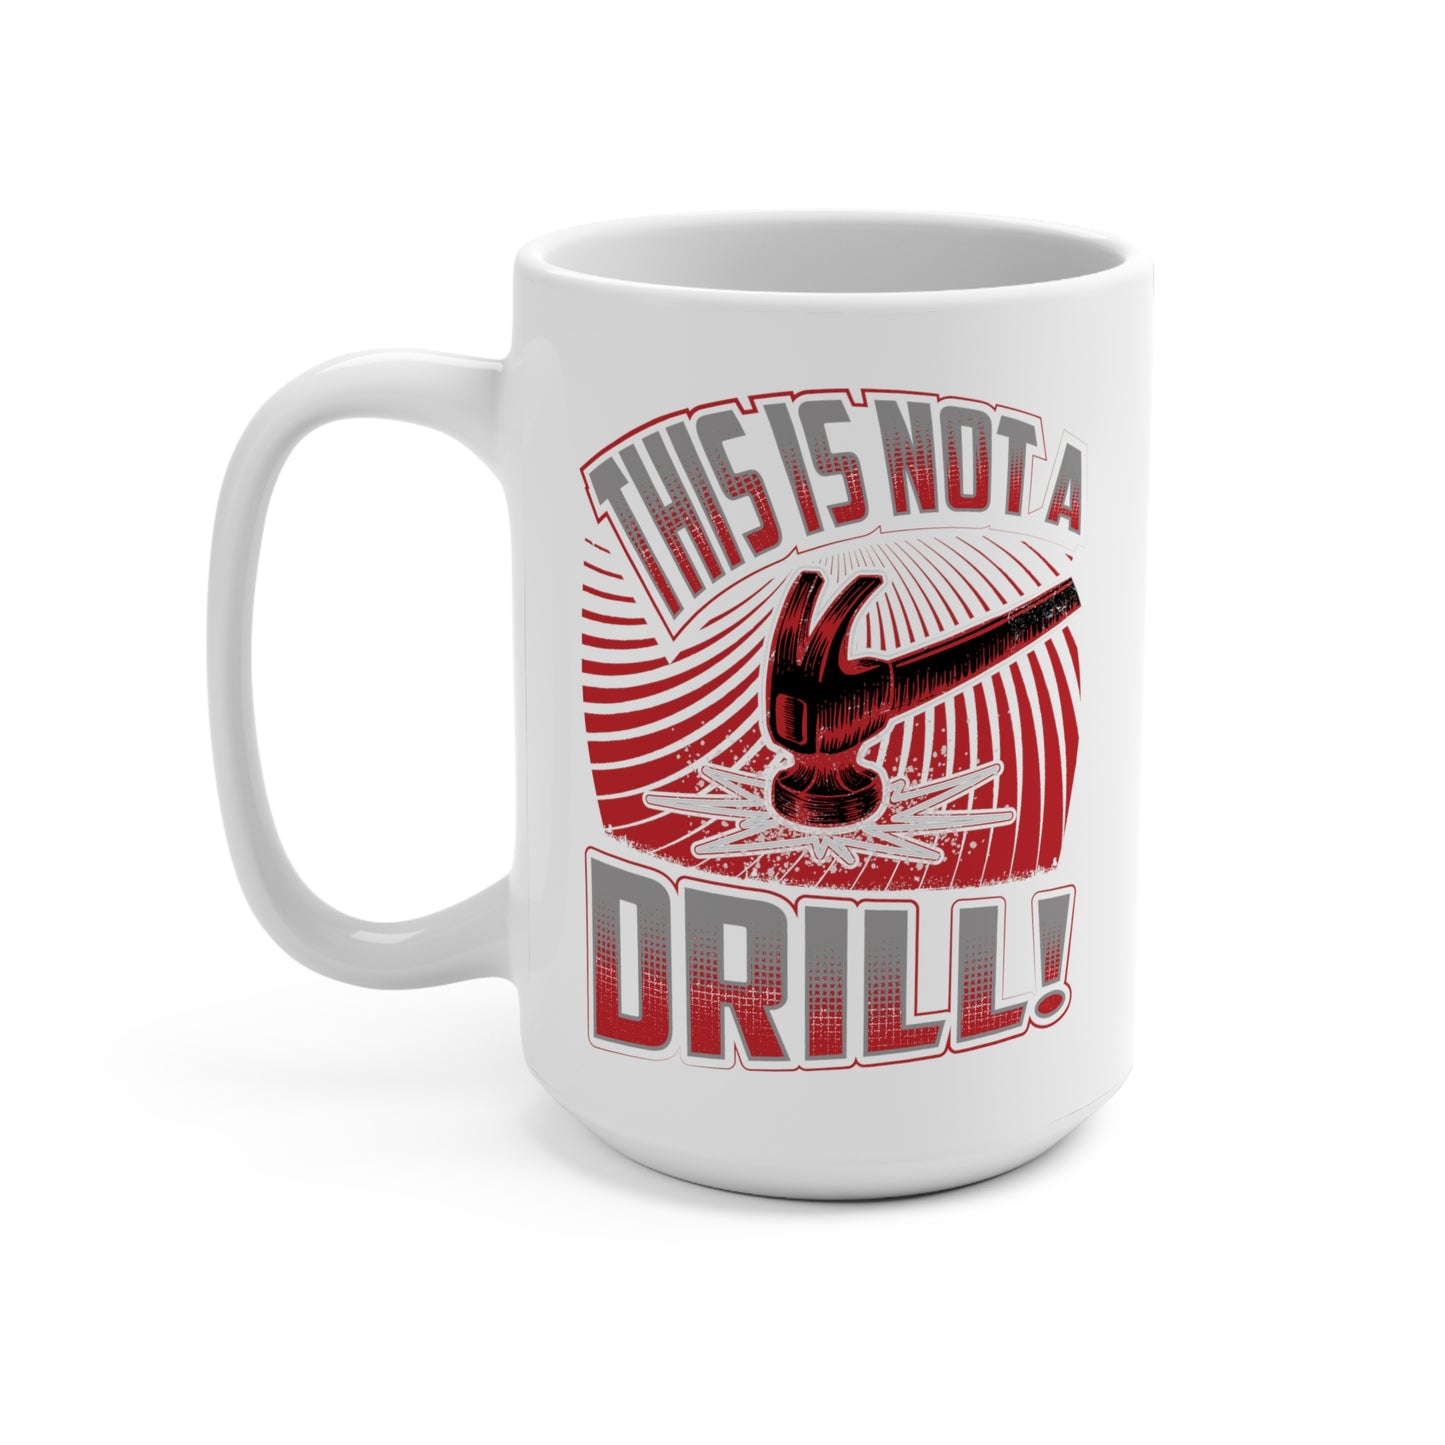 Not A Drill Mug